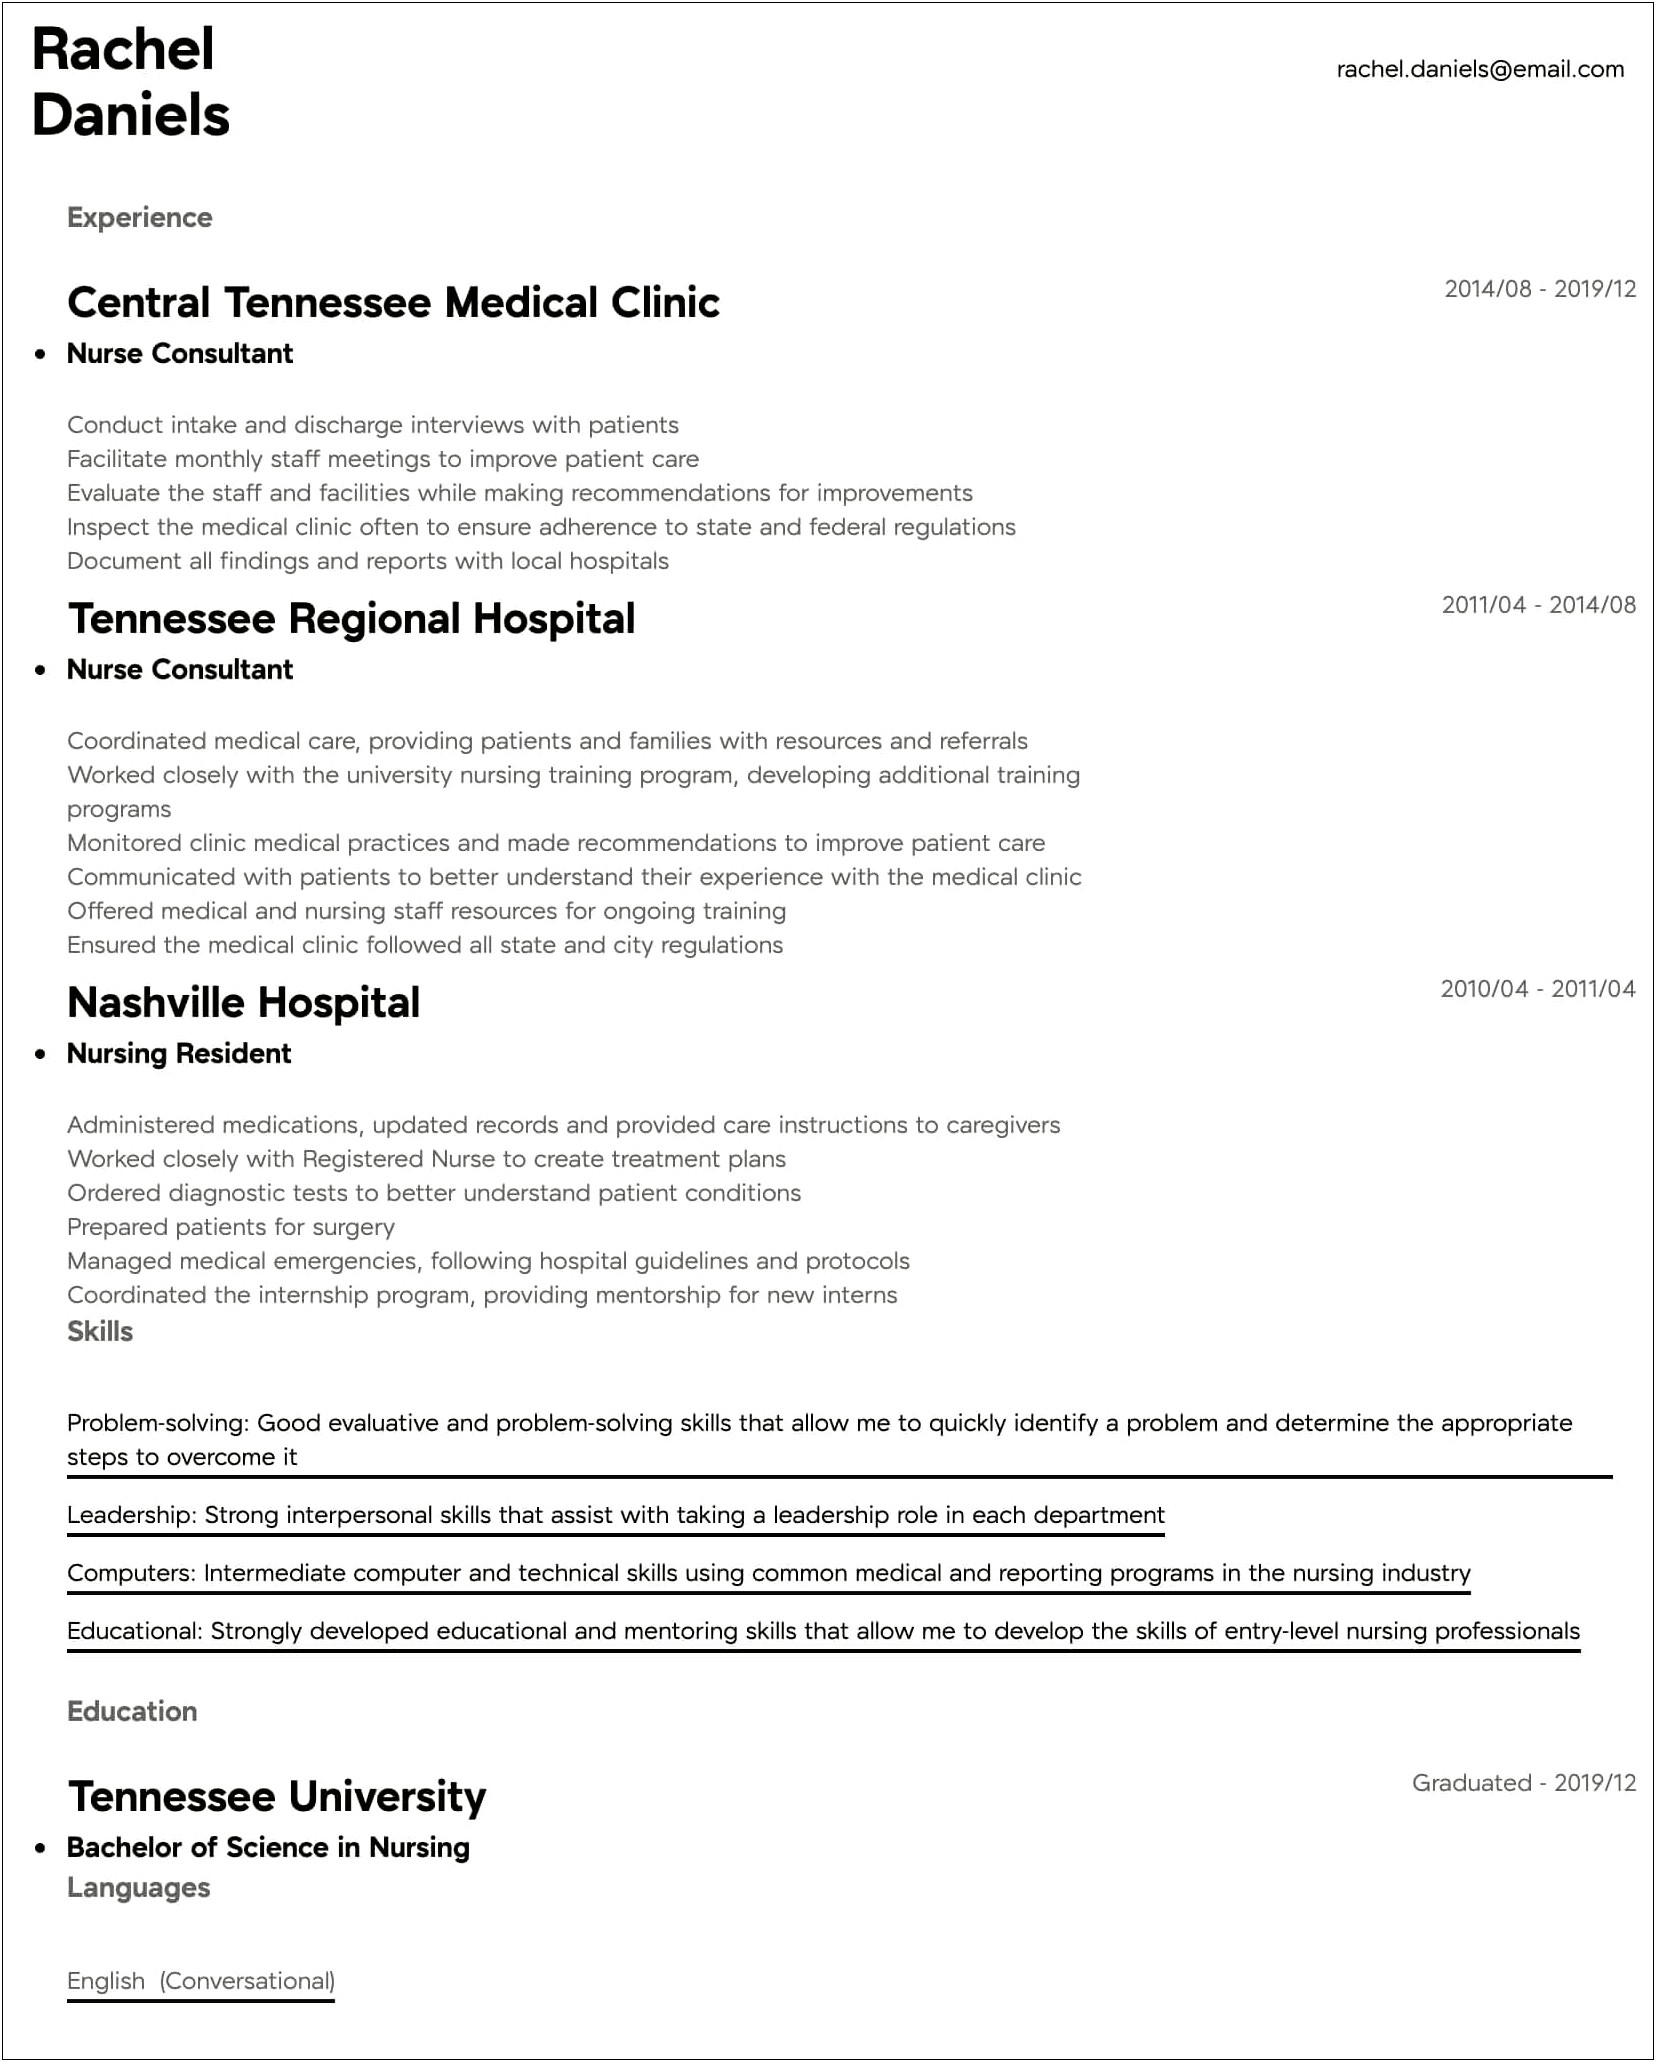 Resume Objective For Mid Level Registered Nurse